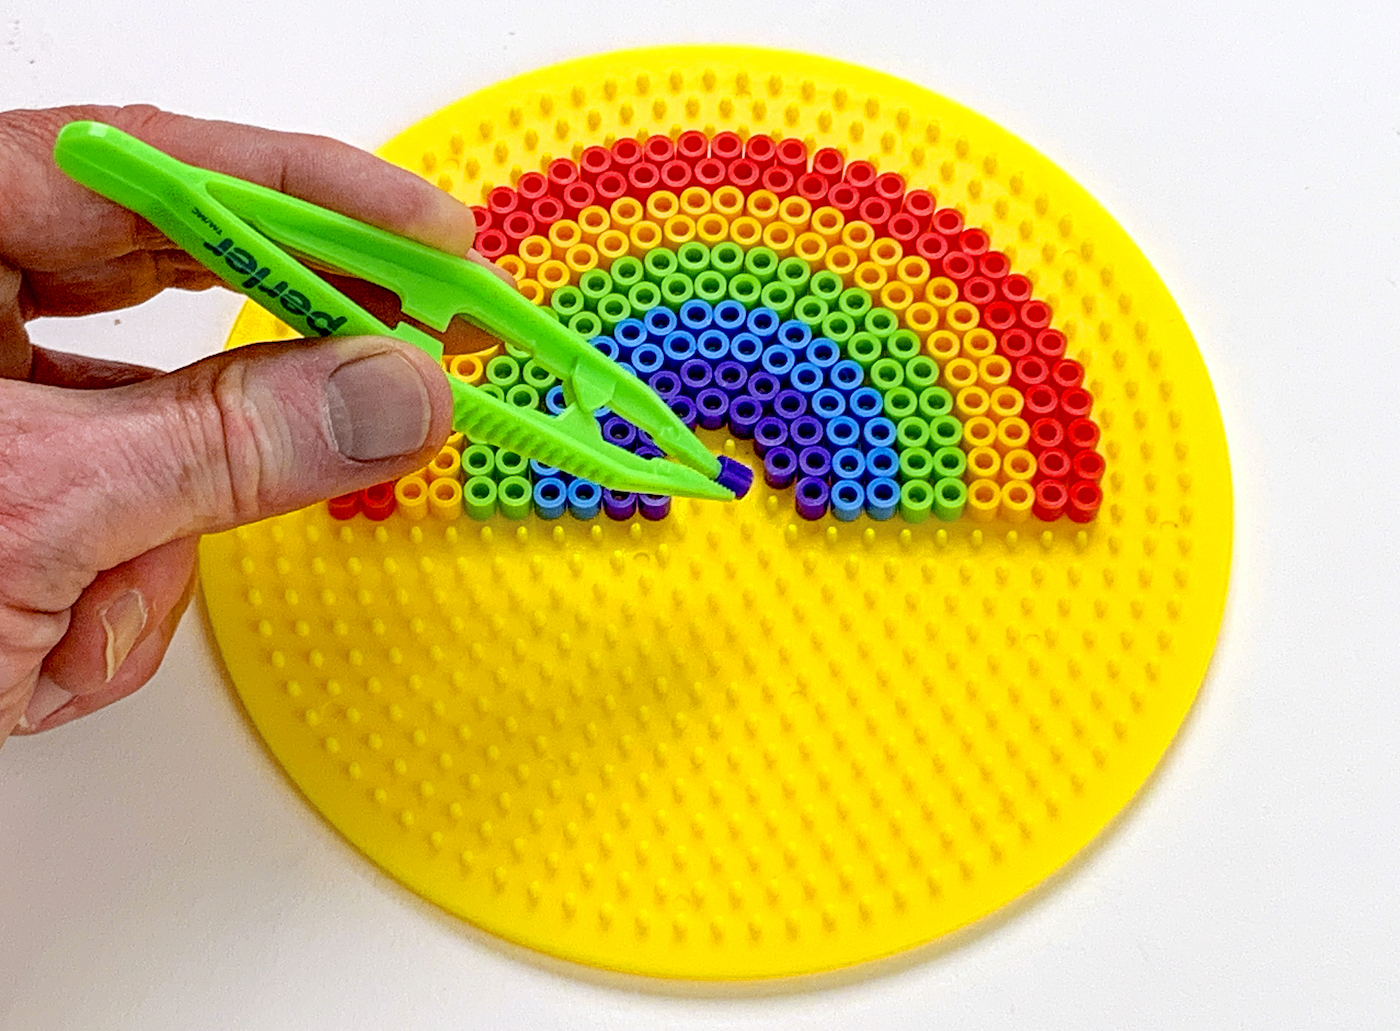 Placing the last purple bead into a rainbow design with tweezers